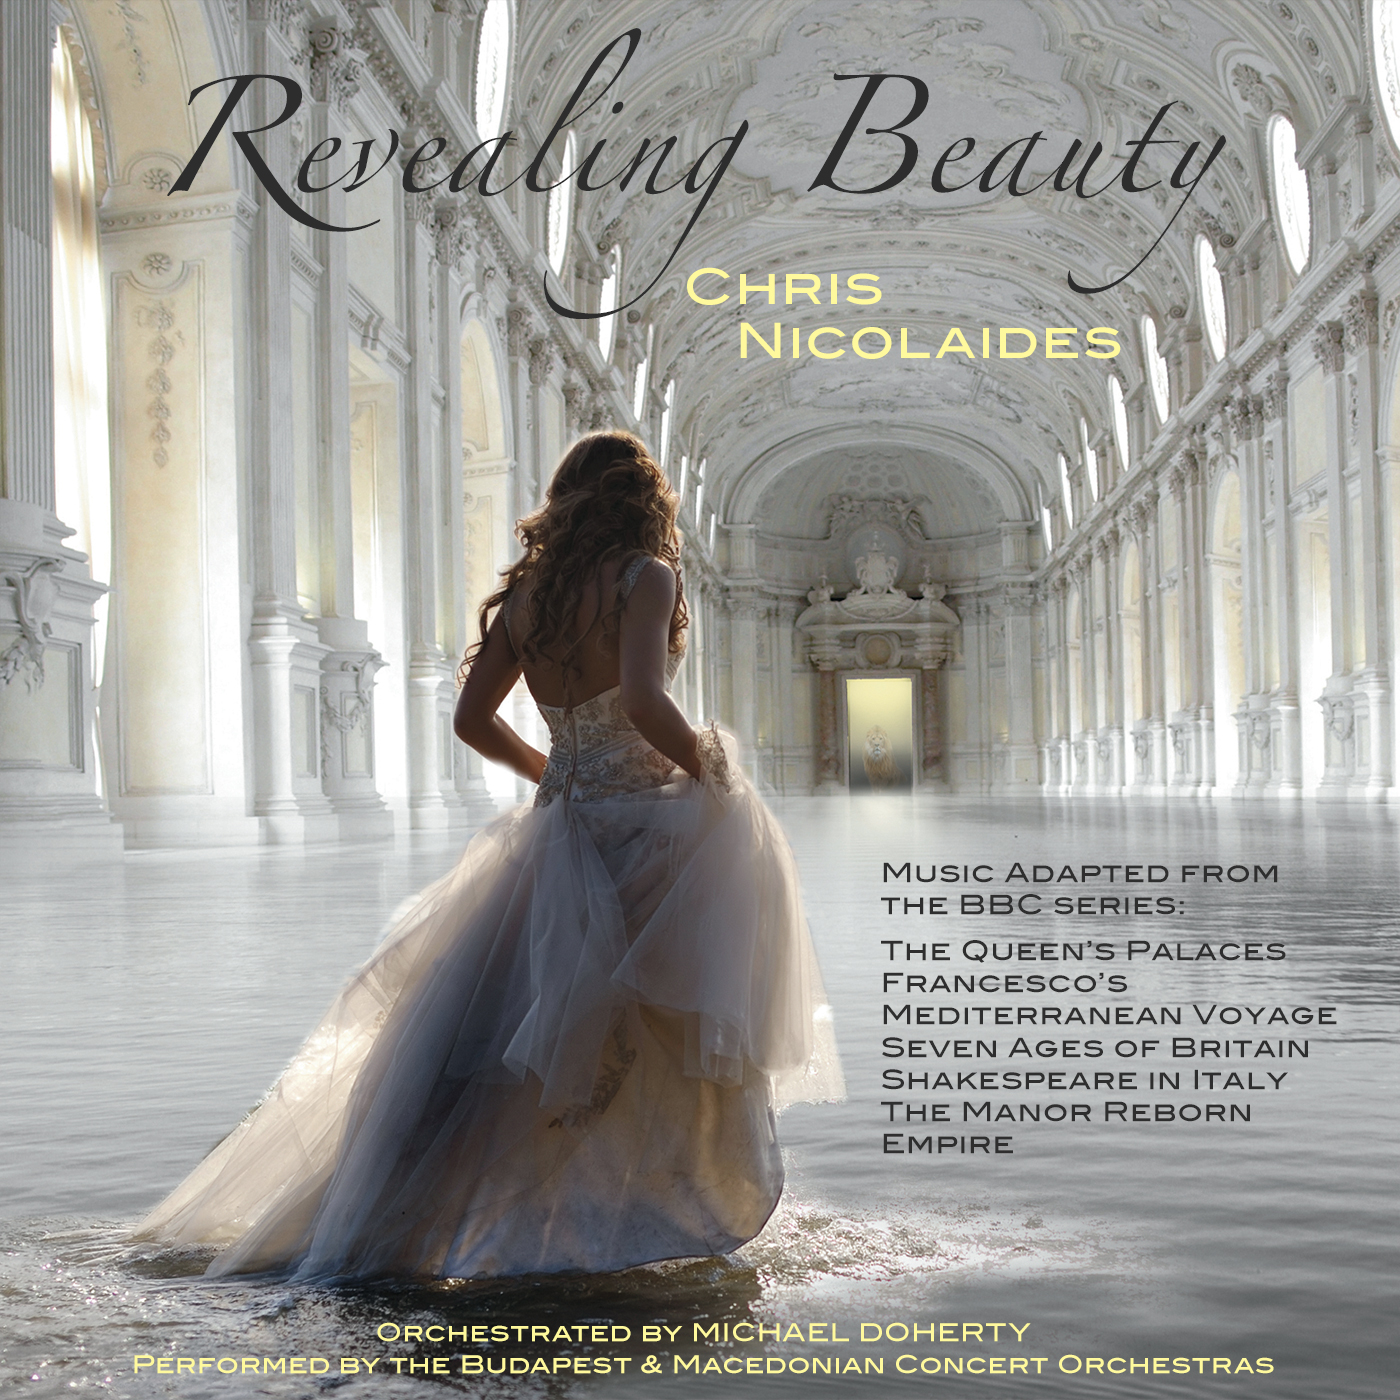 Chris Nicolaides - Revealing Beauty - Julie Elven